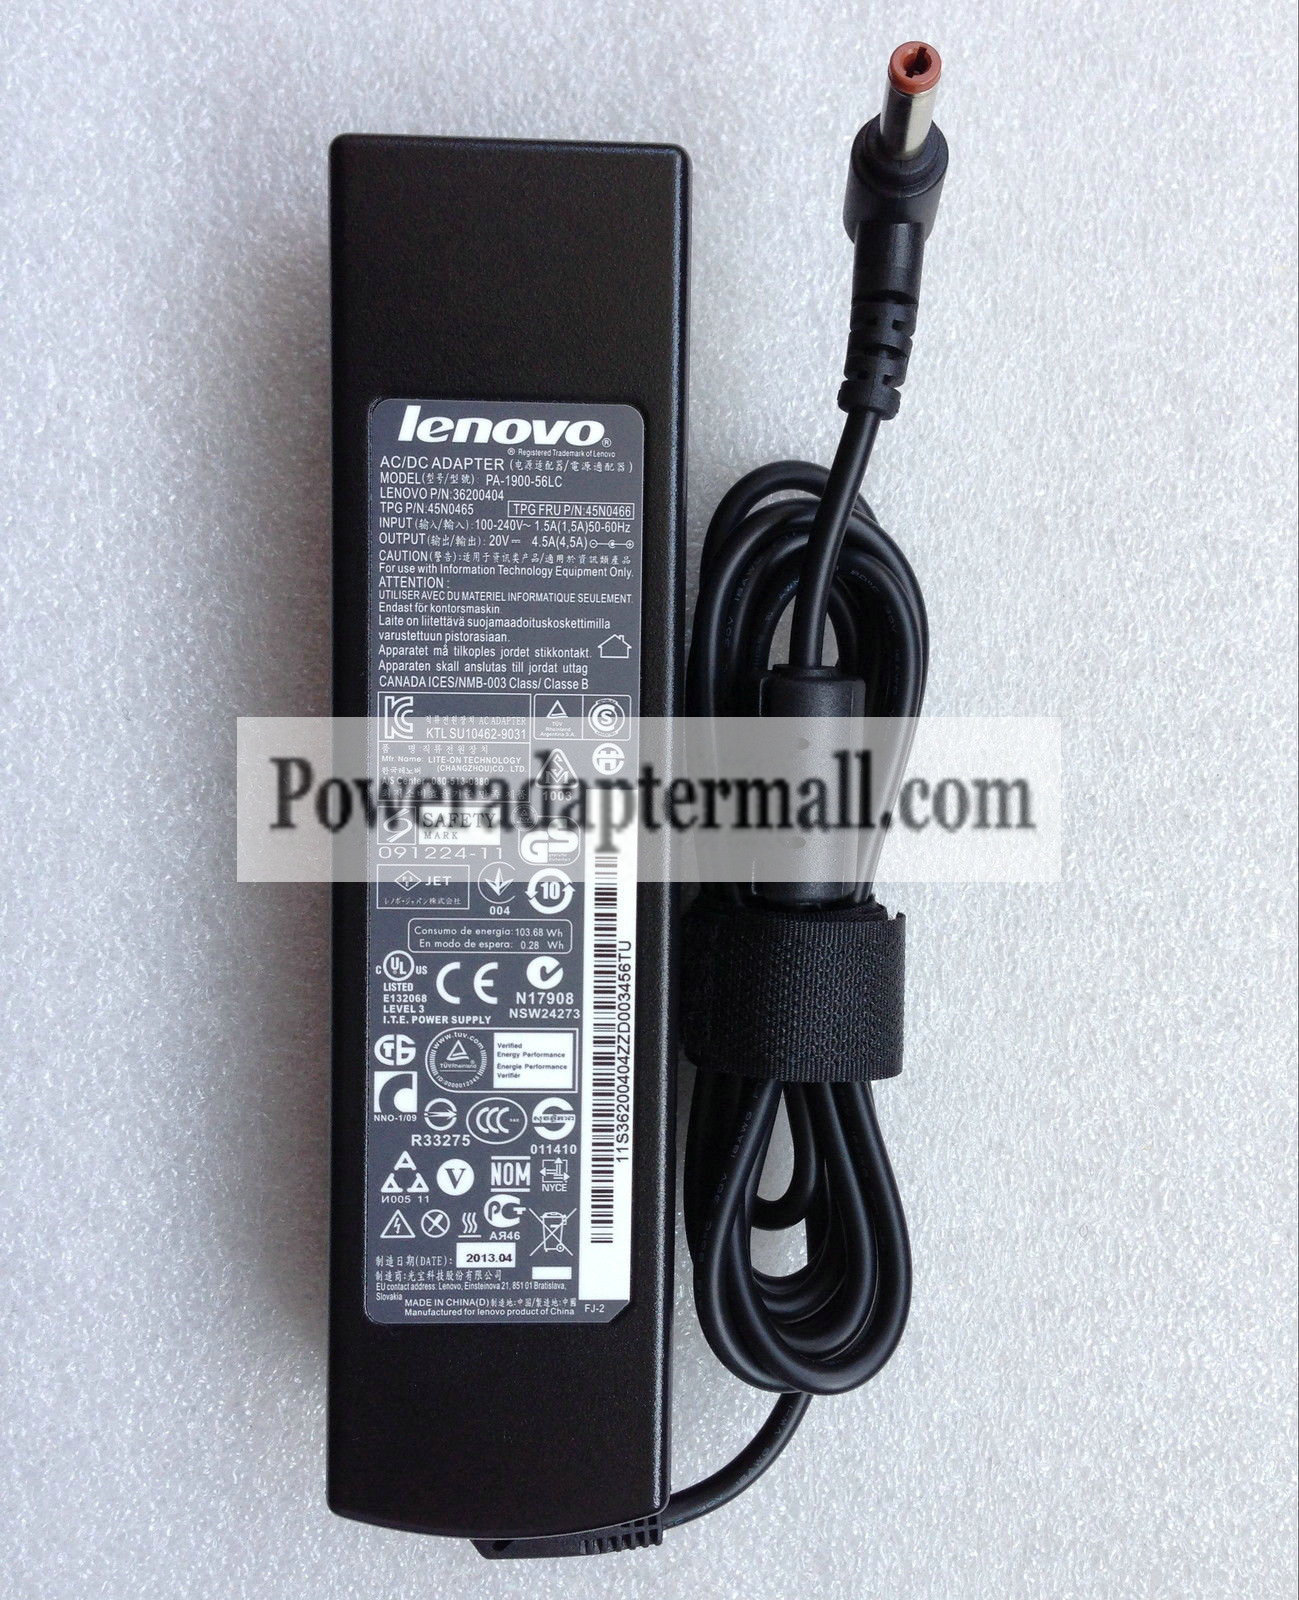 Lenovo G780/i7-3612QM 20V 4.5A AC Power Adapter Charger